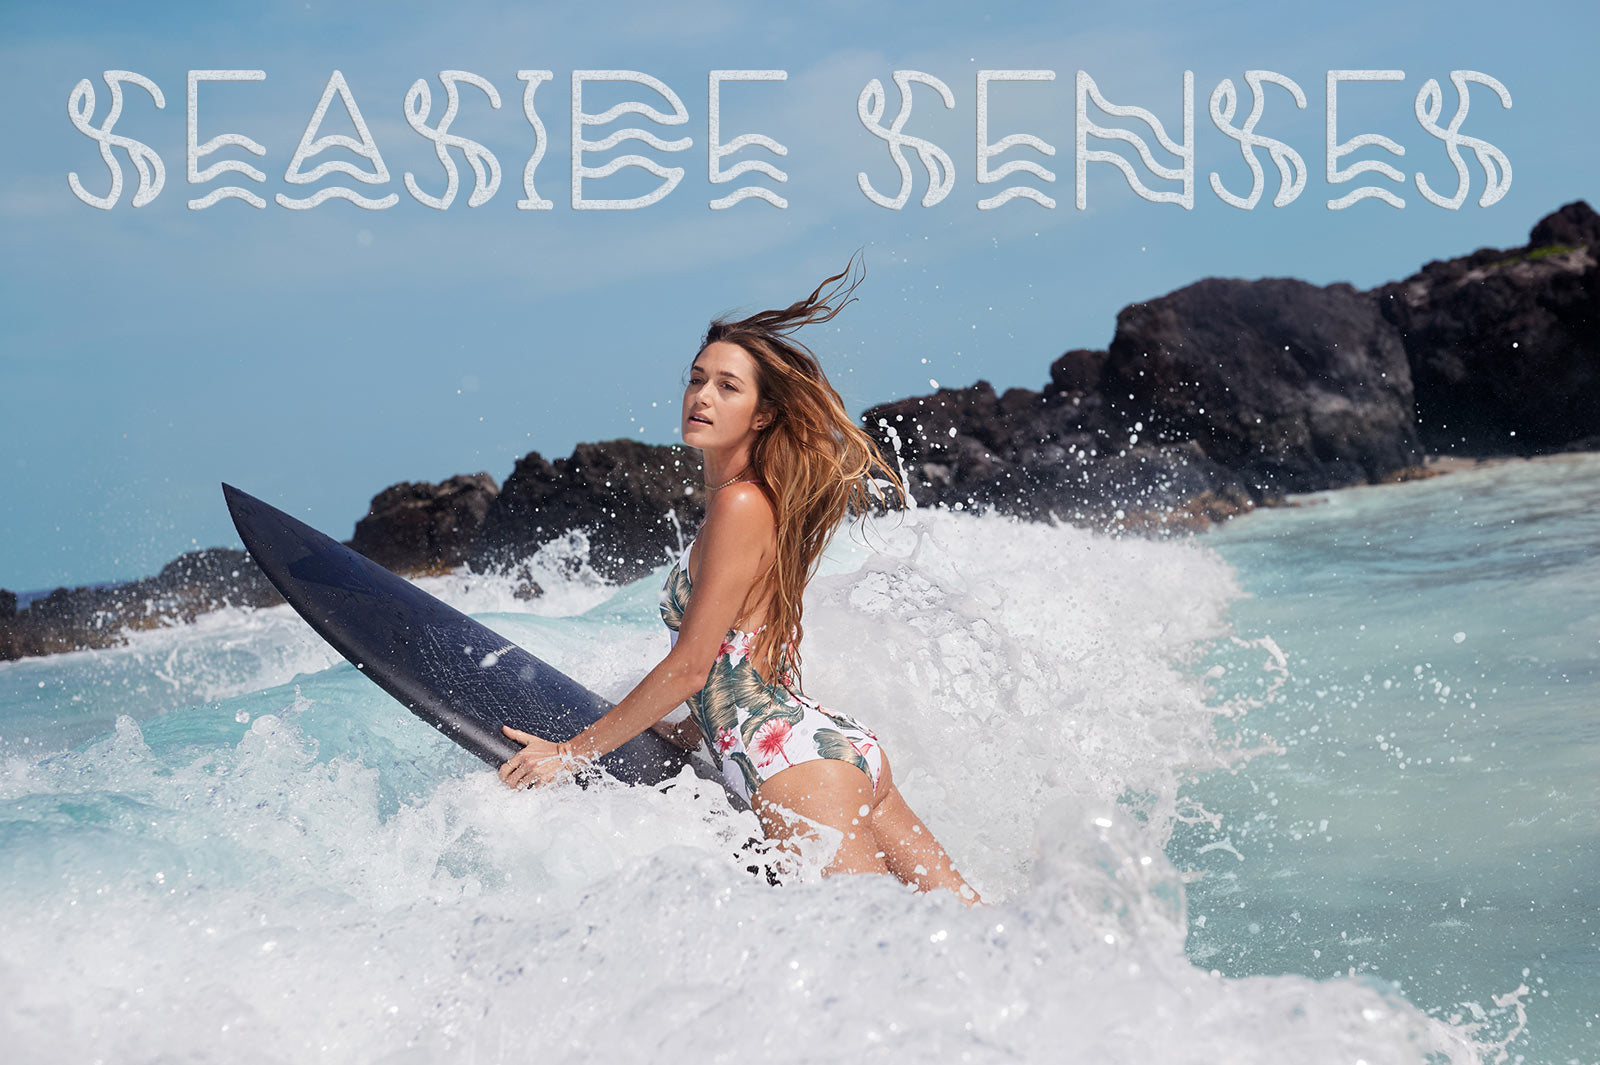 Roxy Women 2019 Seaside Senses Bikini Lifestyle Apparel Collection –